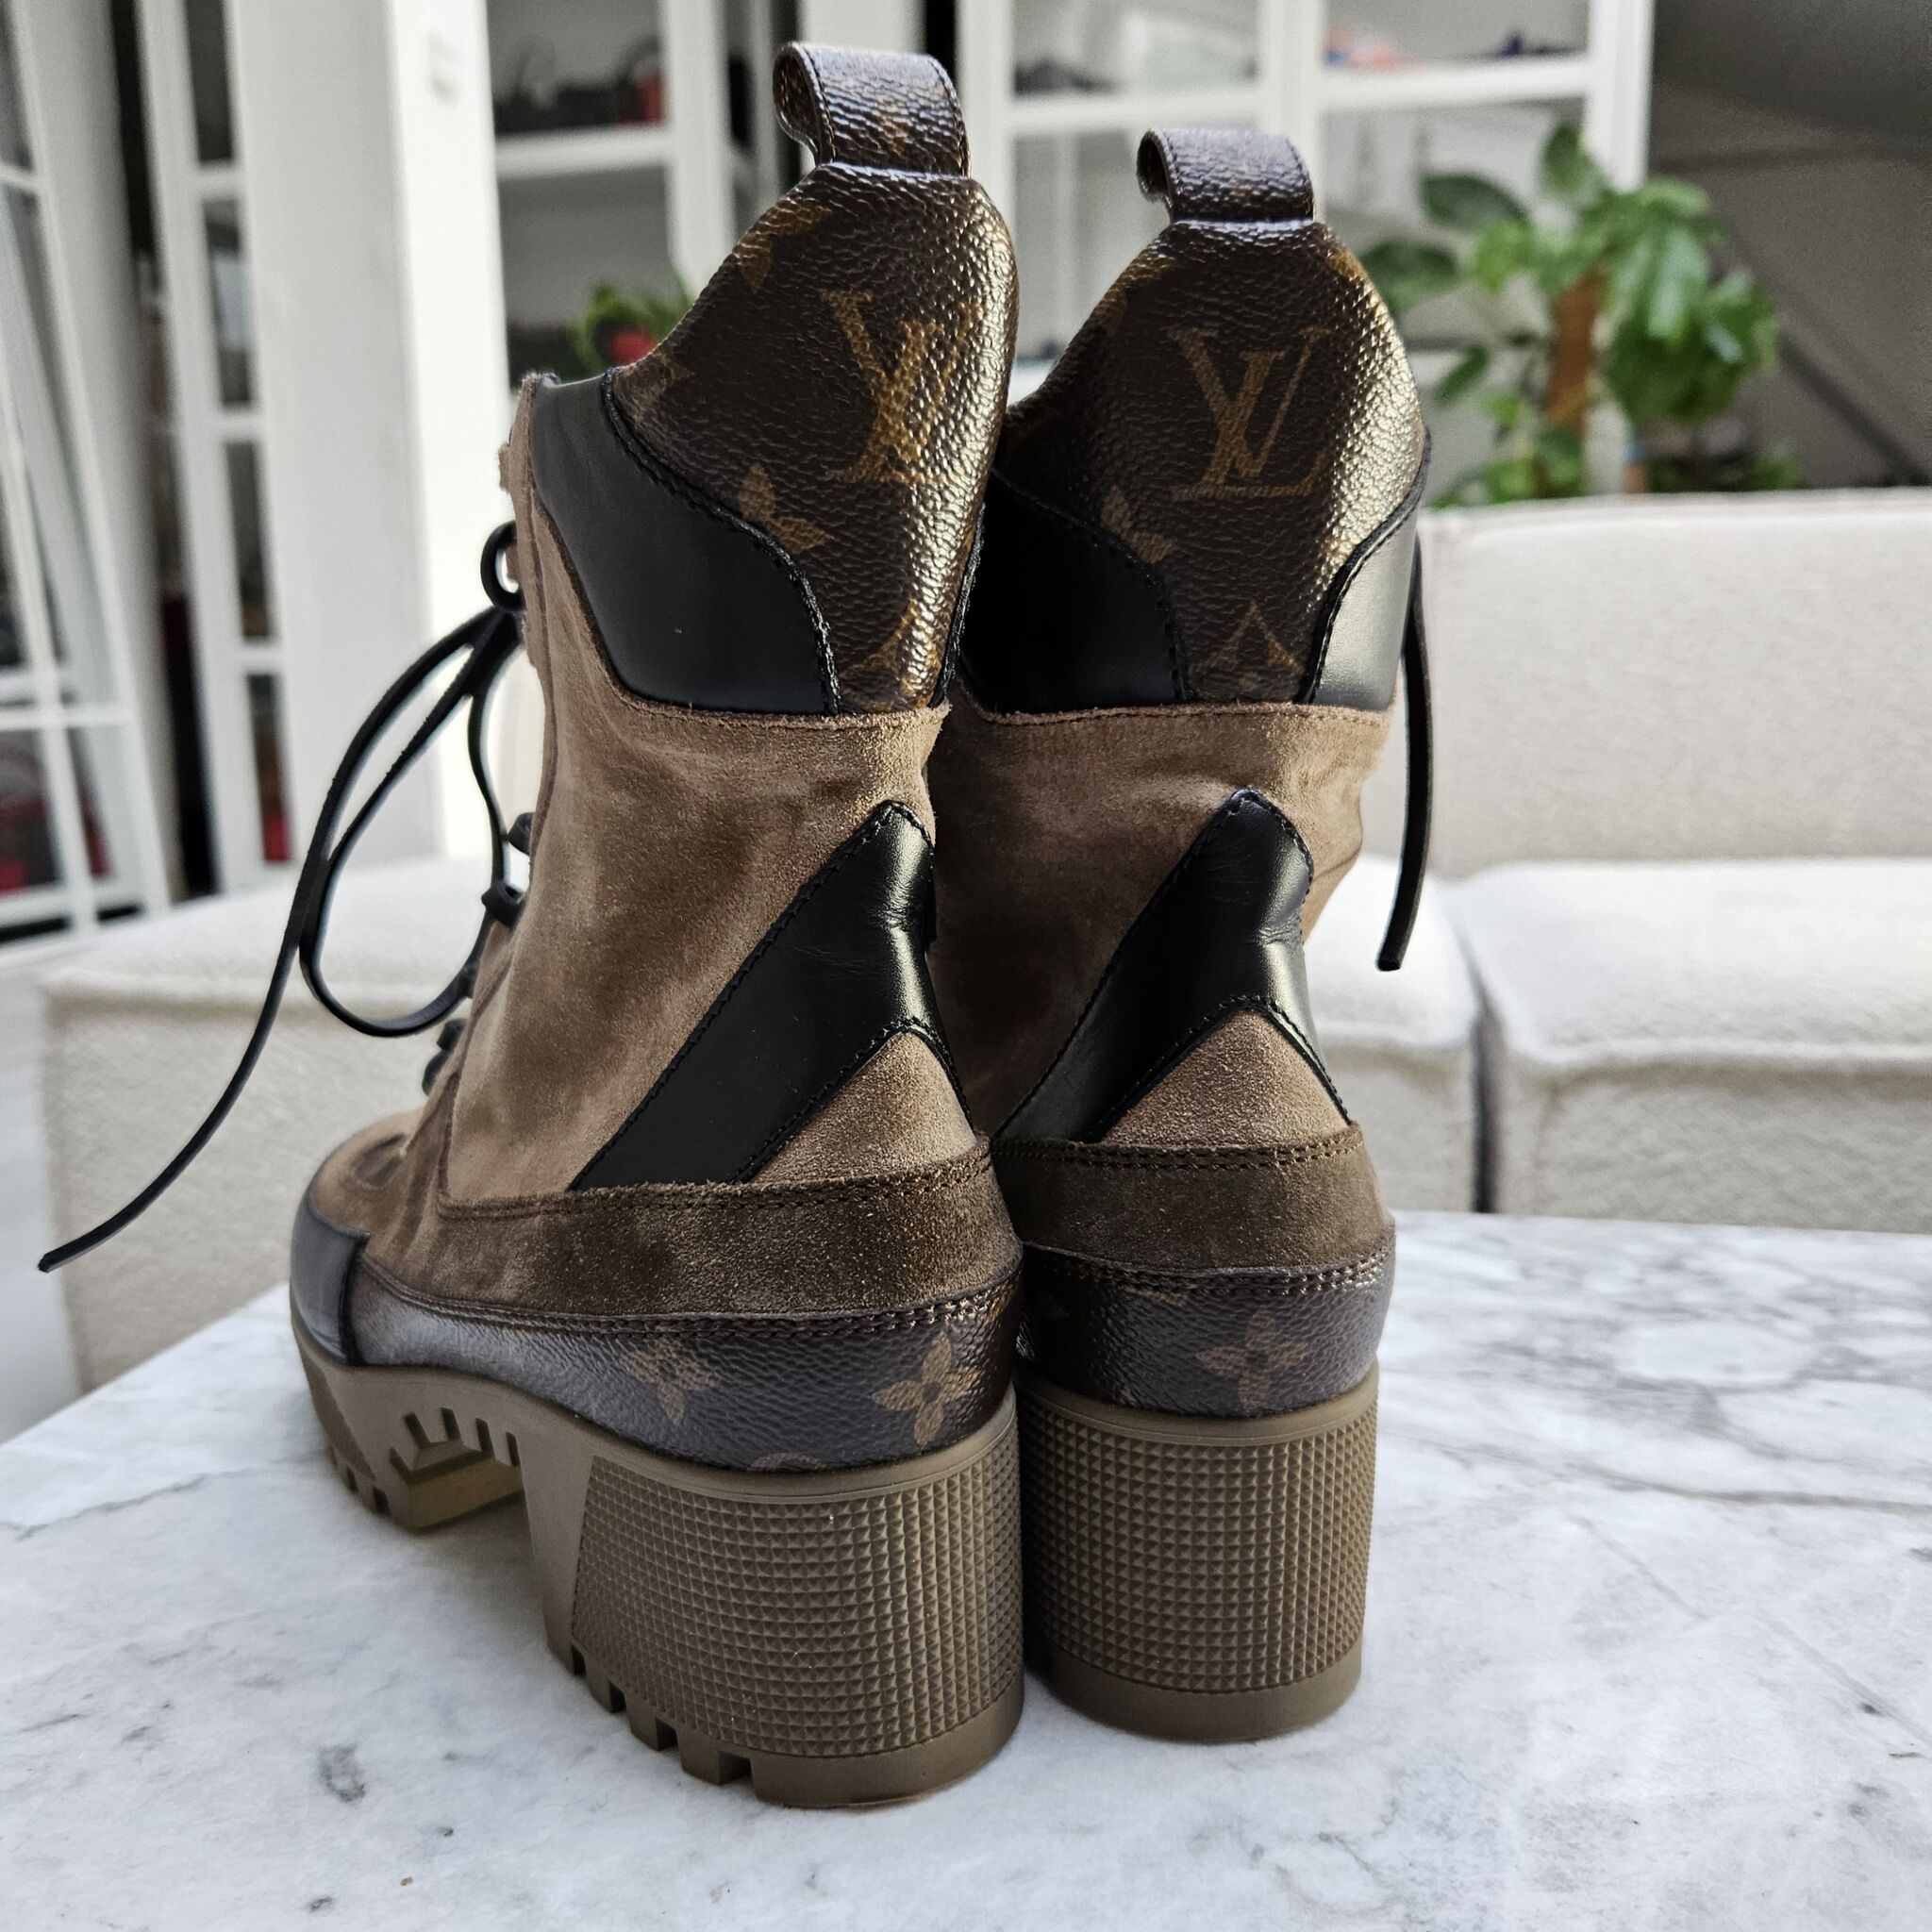 Louis Vuitton Monogram Canvas Suede Laureate Desert Platform Boots